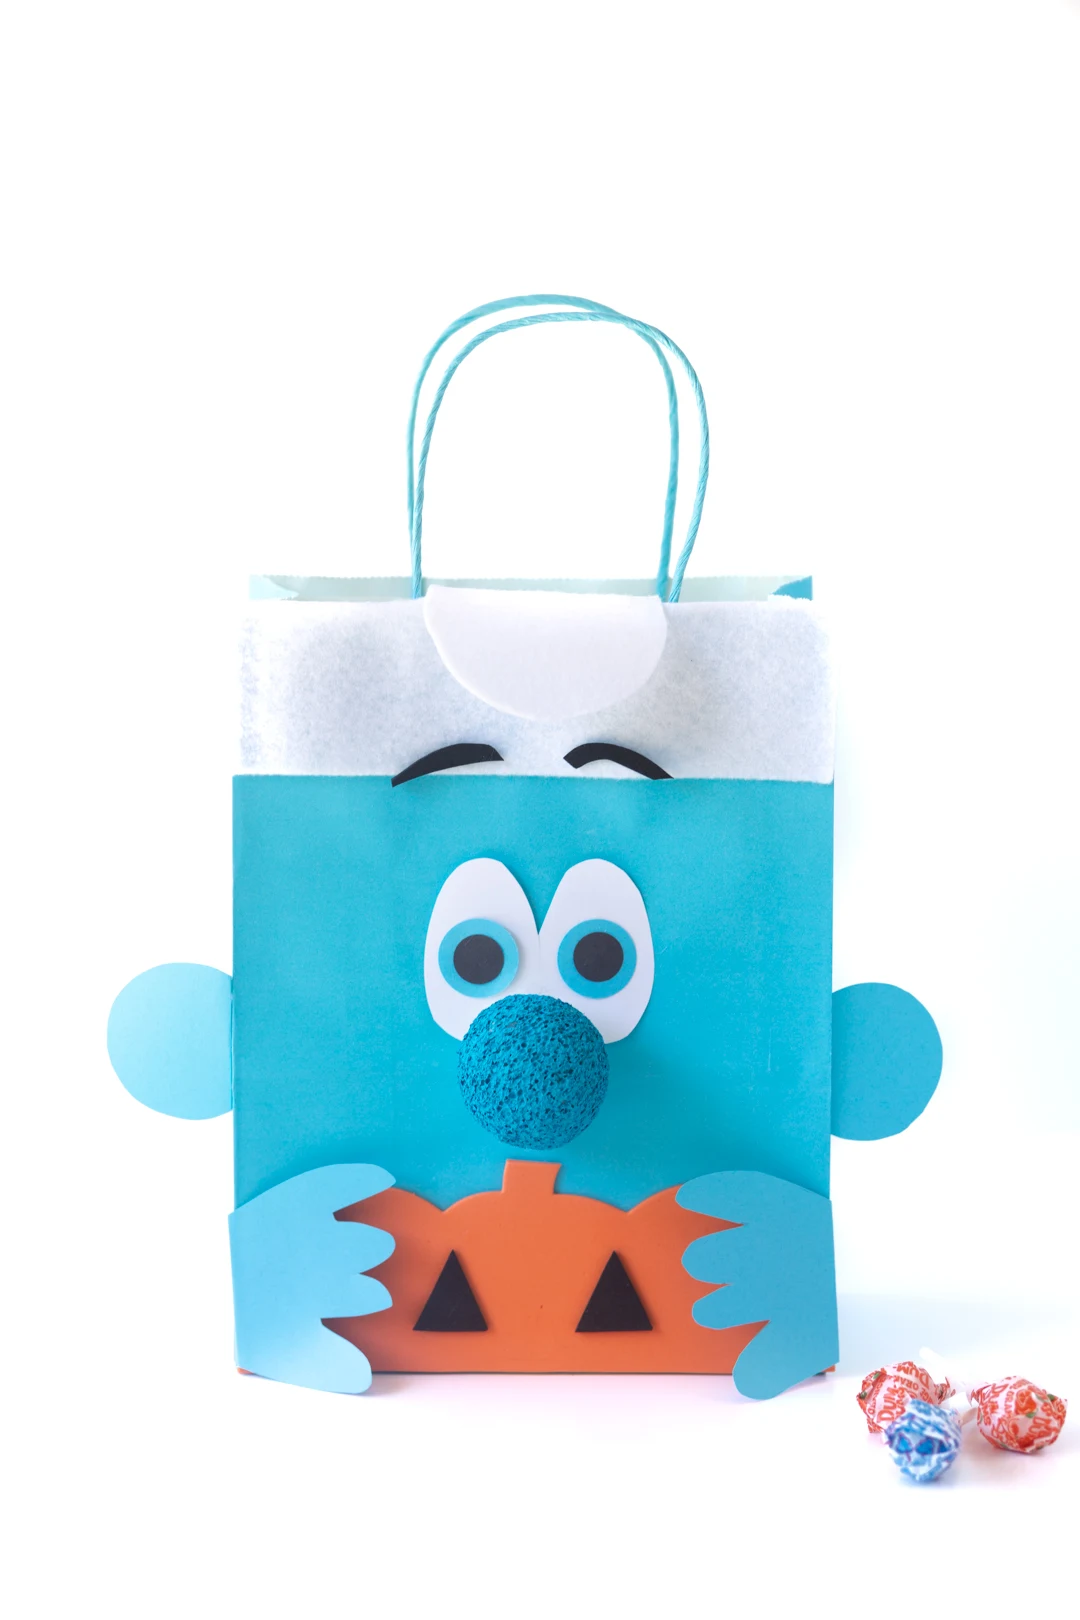 cute smurf halloween treat bag diy project. smurf holding foam pumpkin.